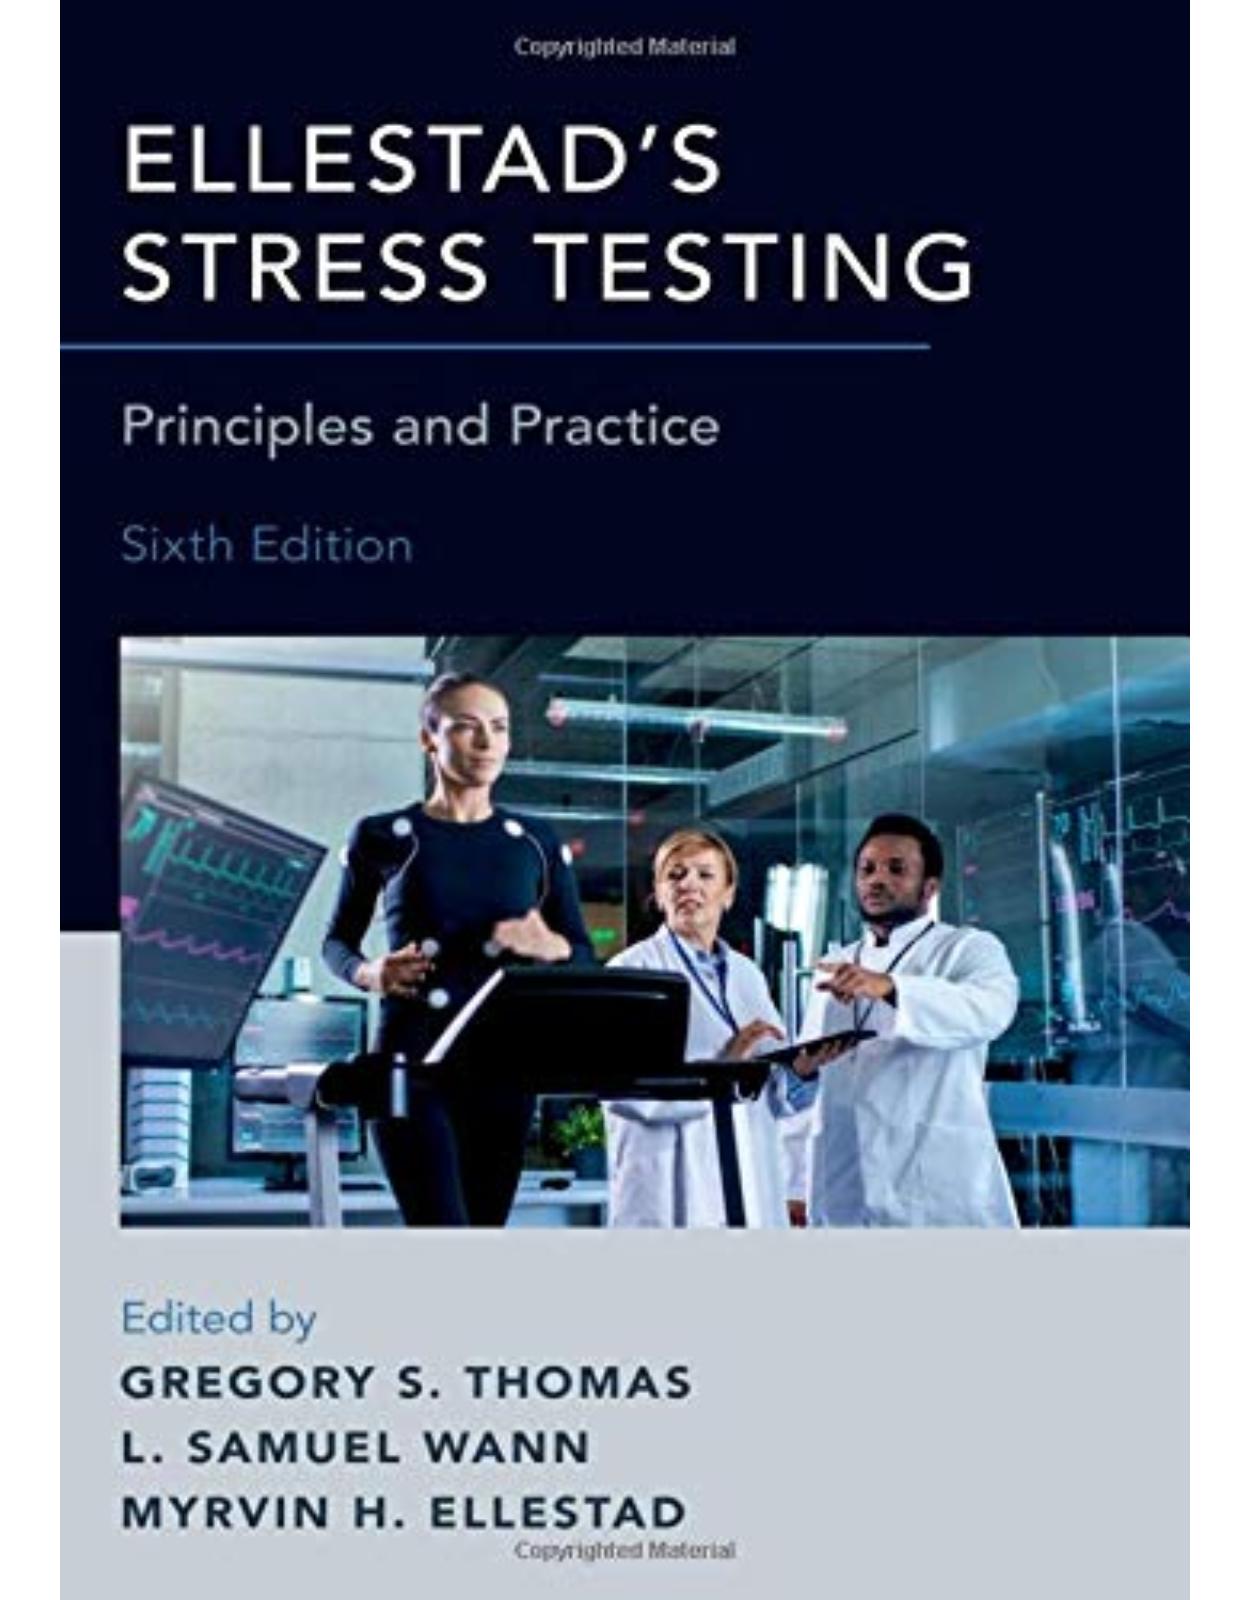 Ellestad's Stress Testing: Principles and Practice